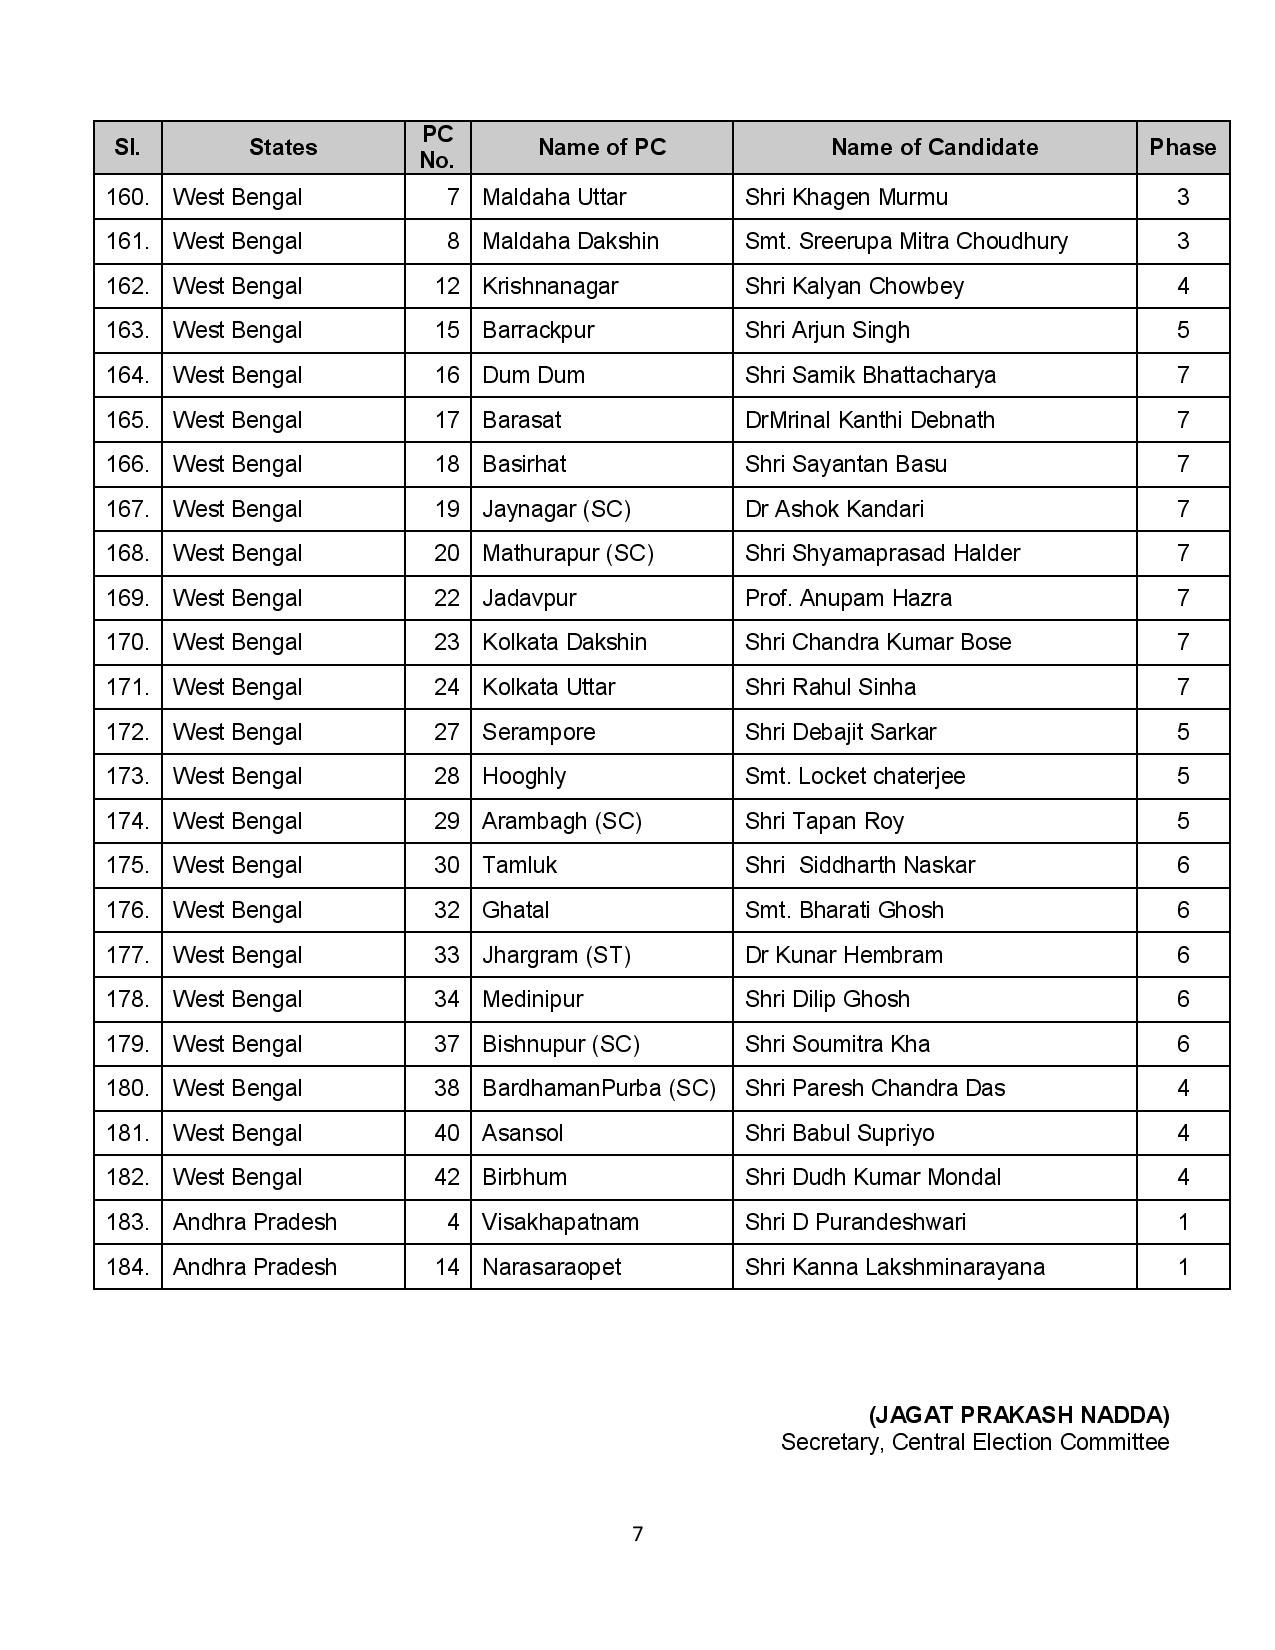 bjp announces first list for 2019 loksabha election, no place for advani - Satya Hindi